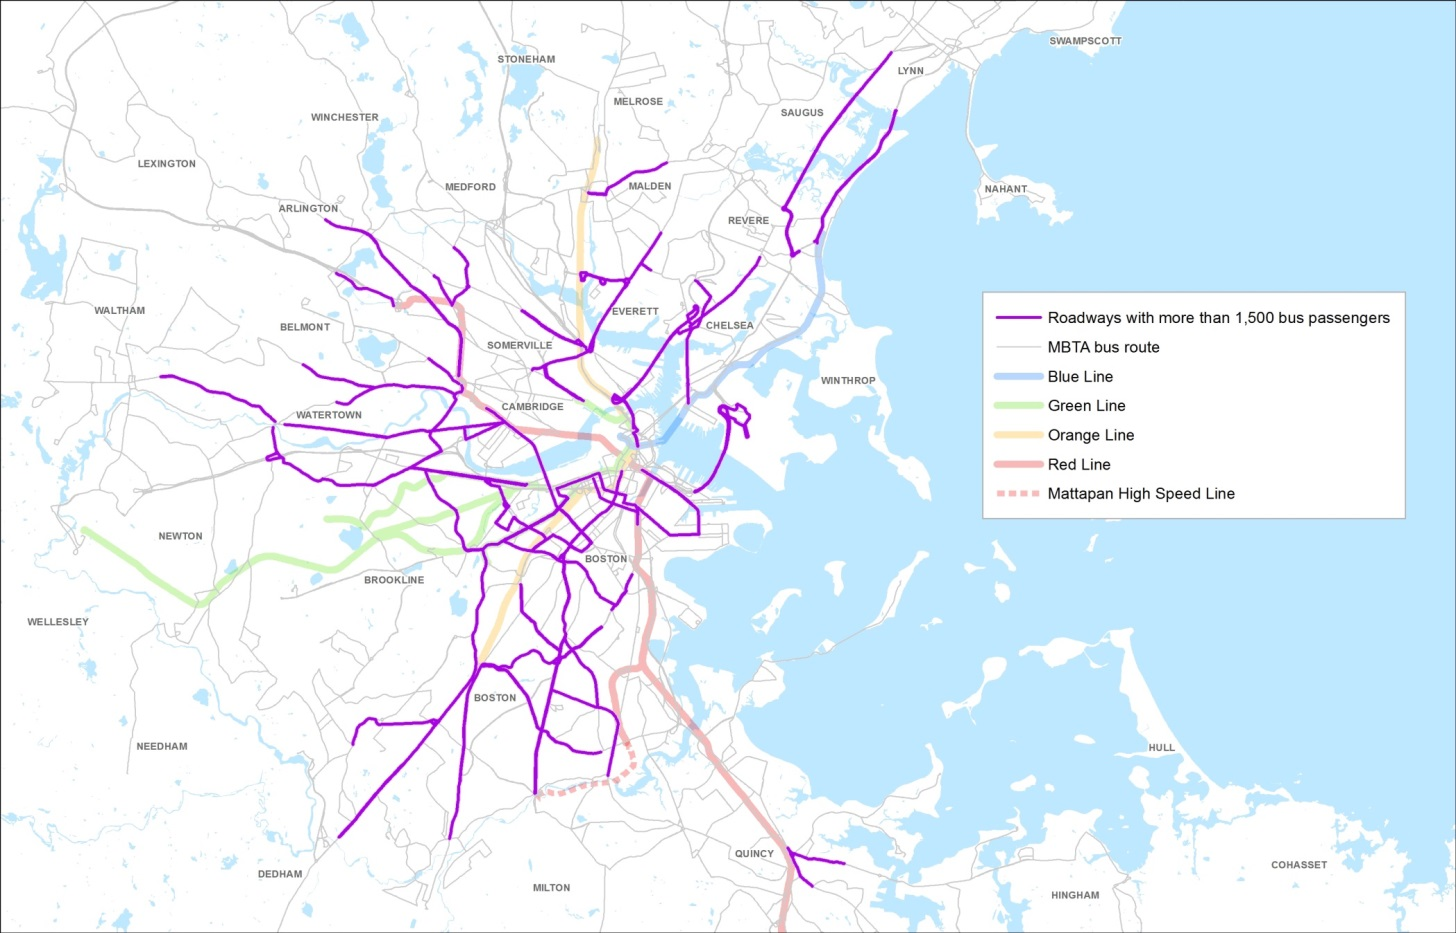 Map showing high-ridership bus corridors in the MBTA region.